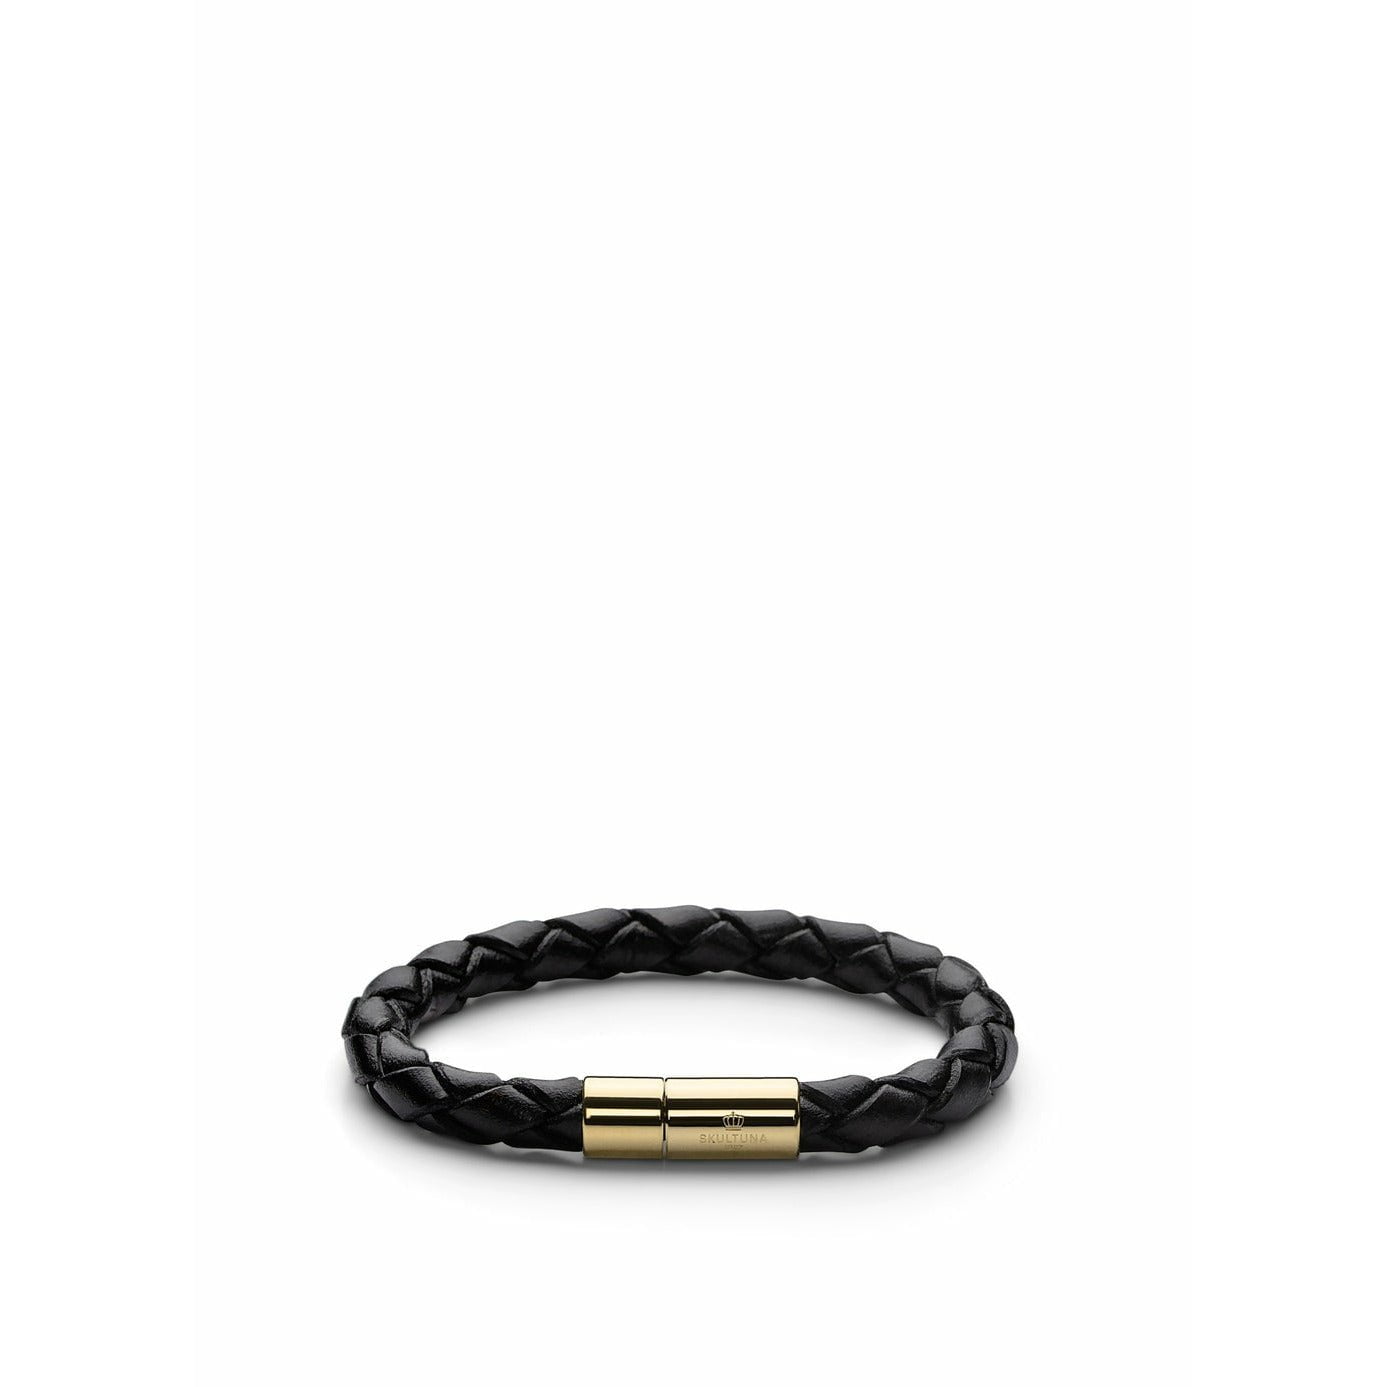 Skultuna Het kenmerkende massieve armbandmedium Ø16,5 cm, zwart